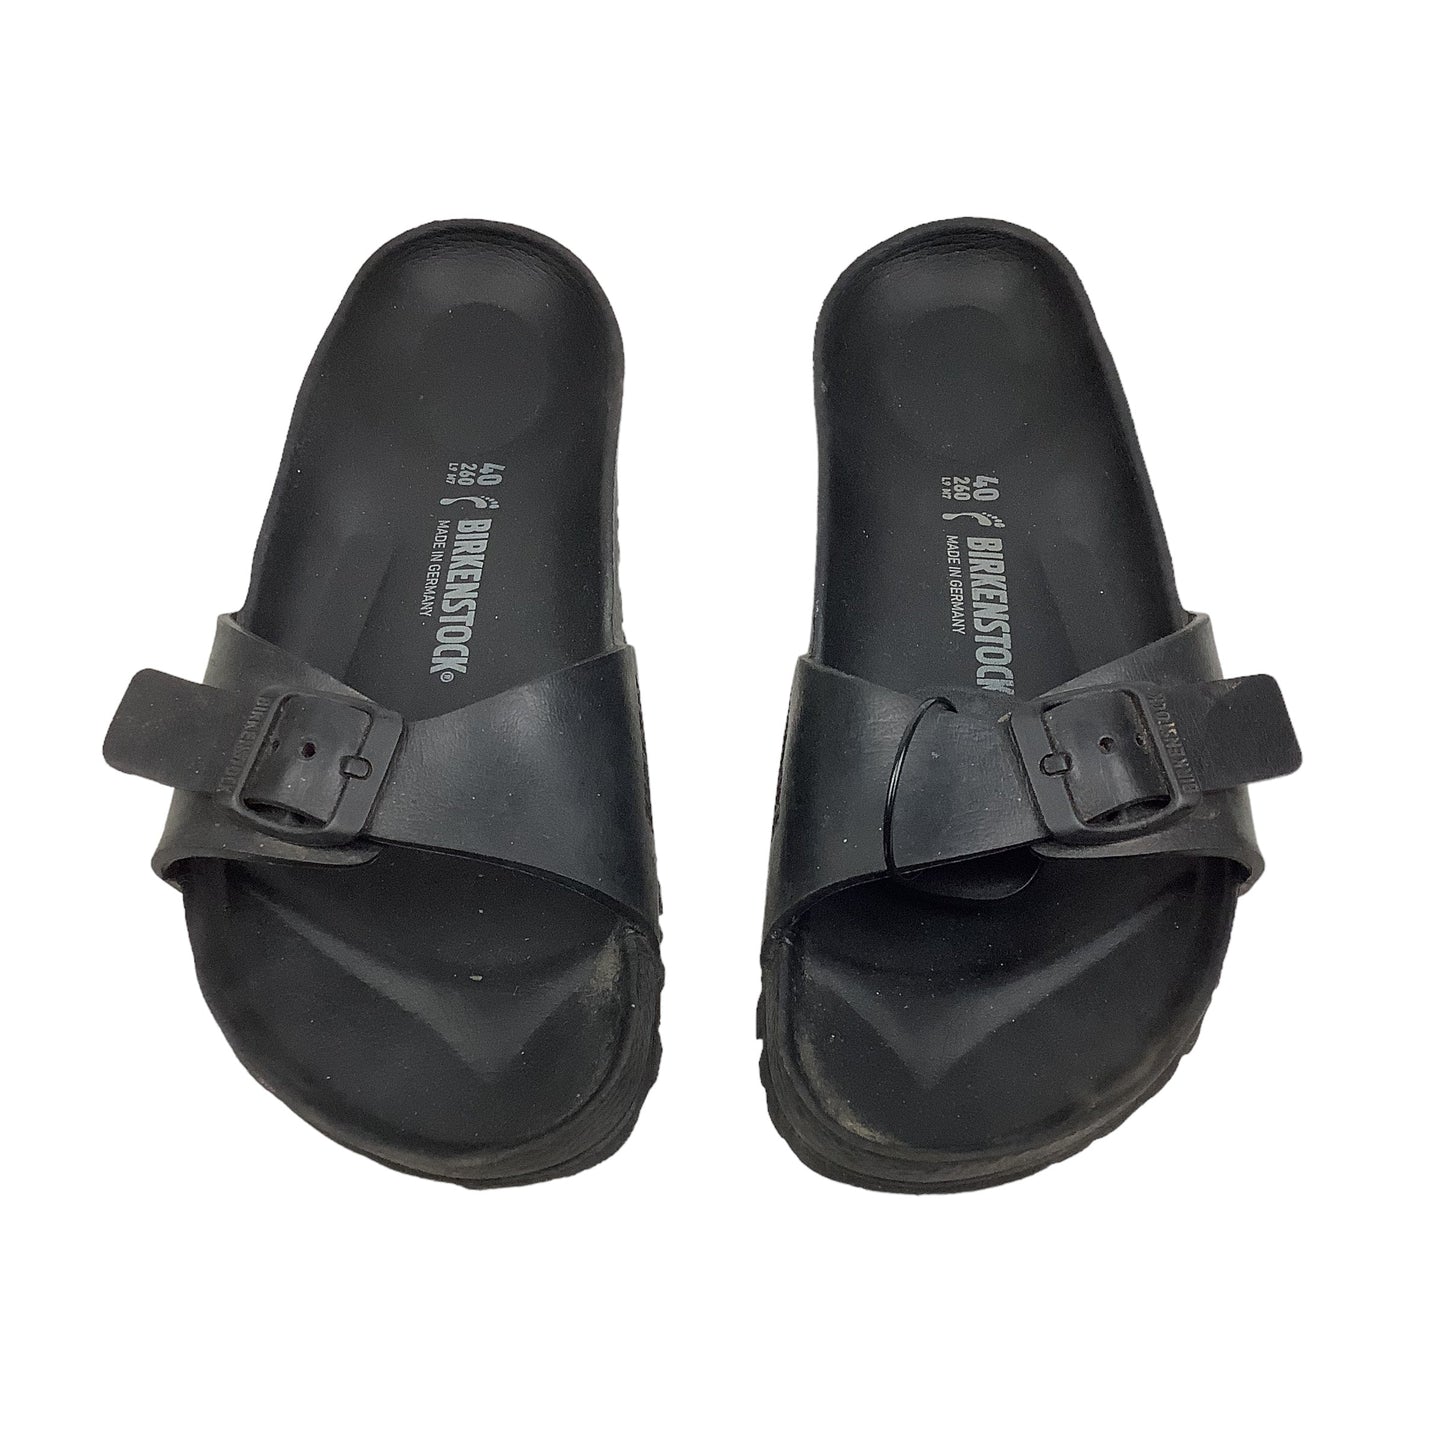 Black Sandals Flats Birkenstock, Size 9.5